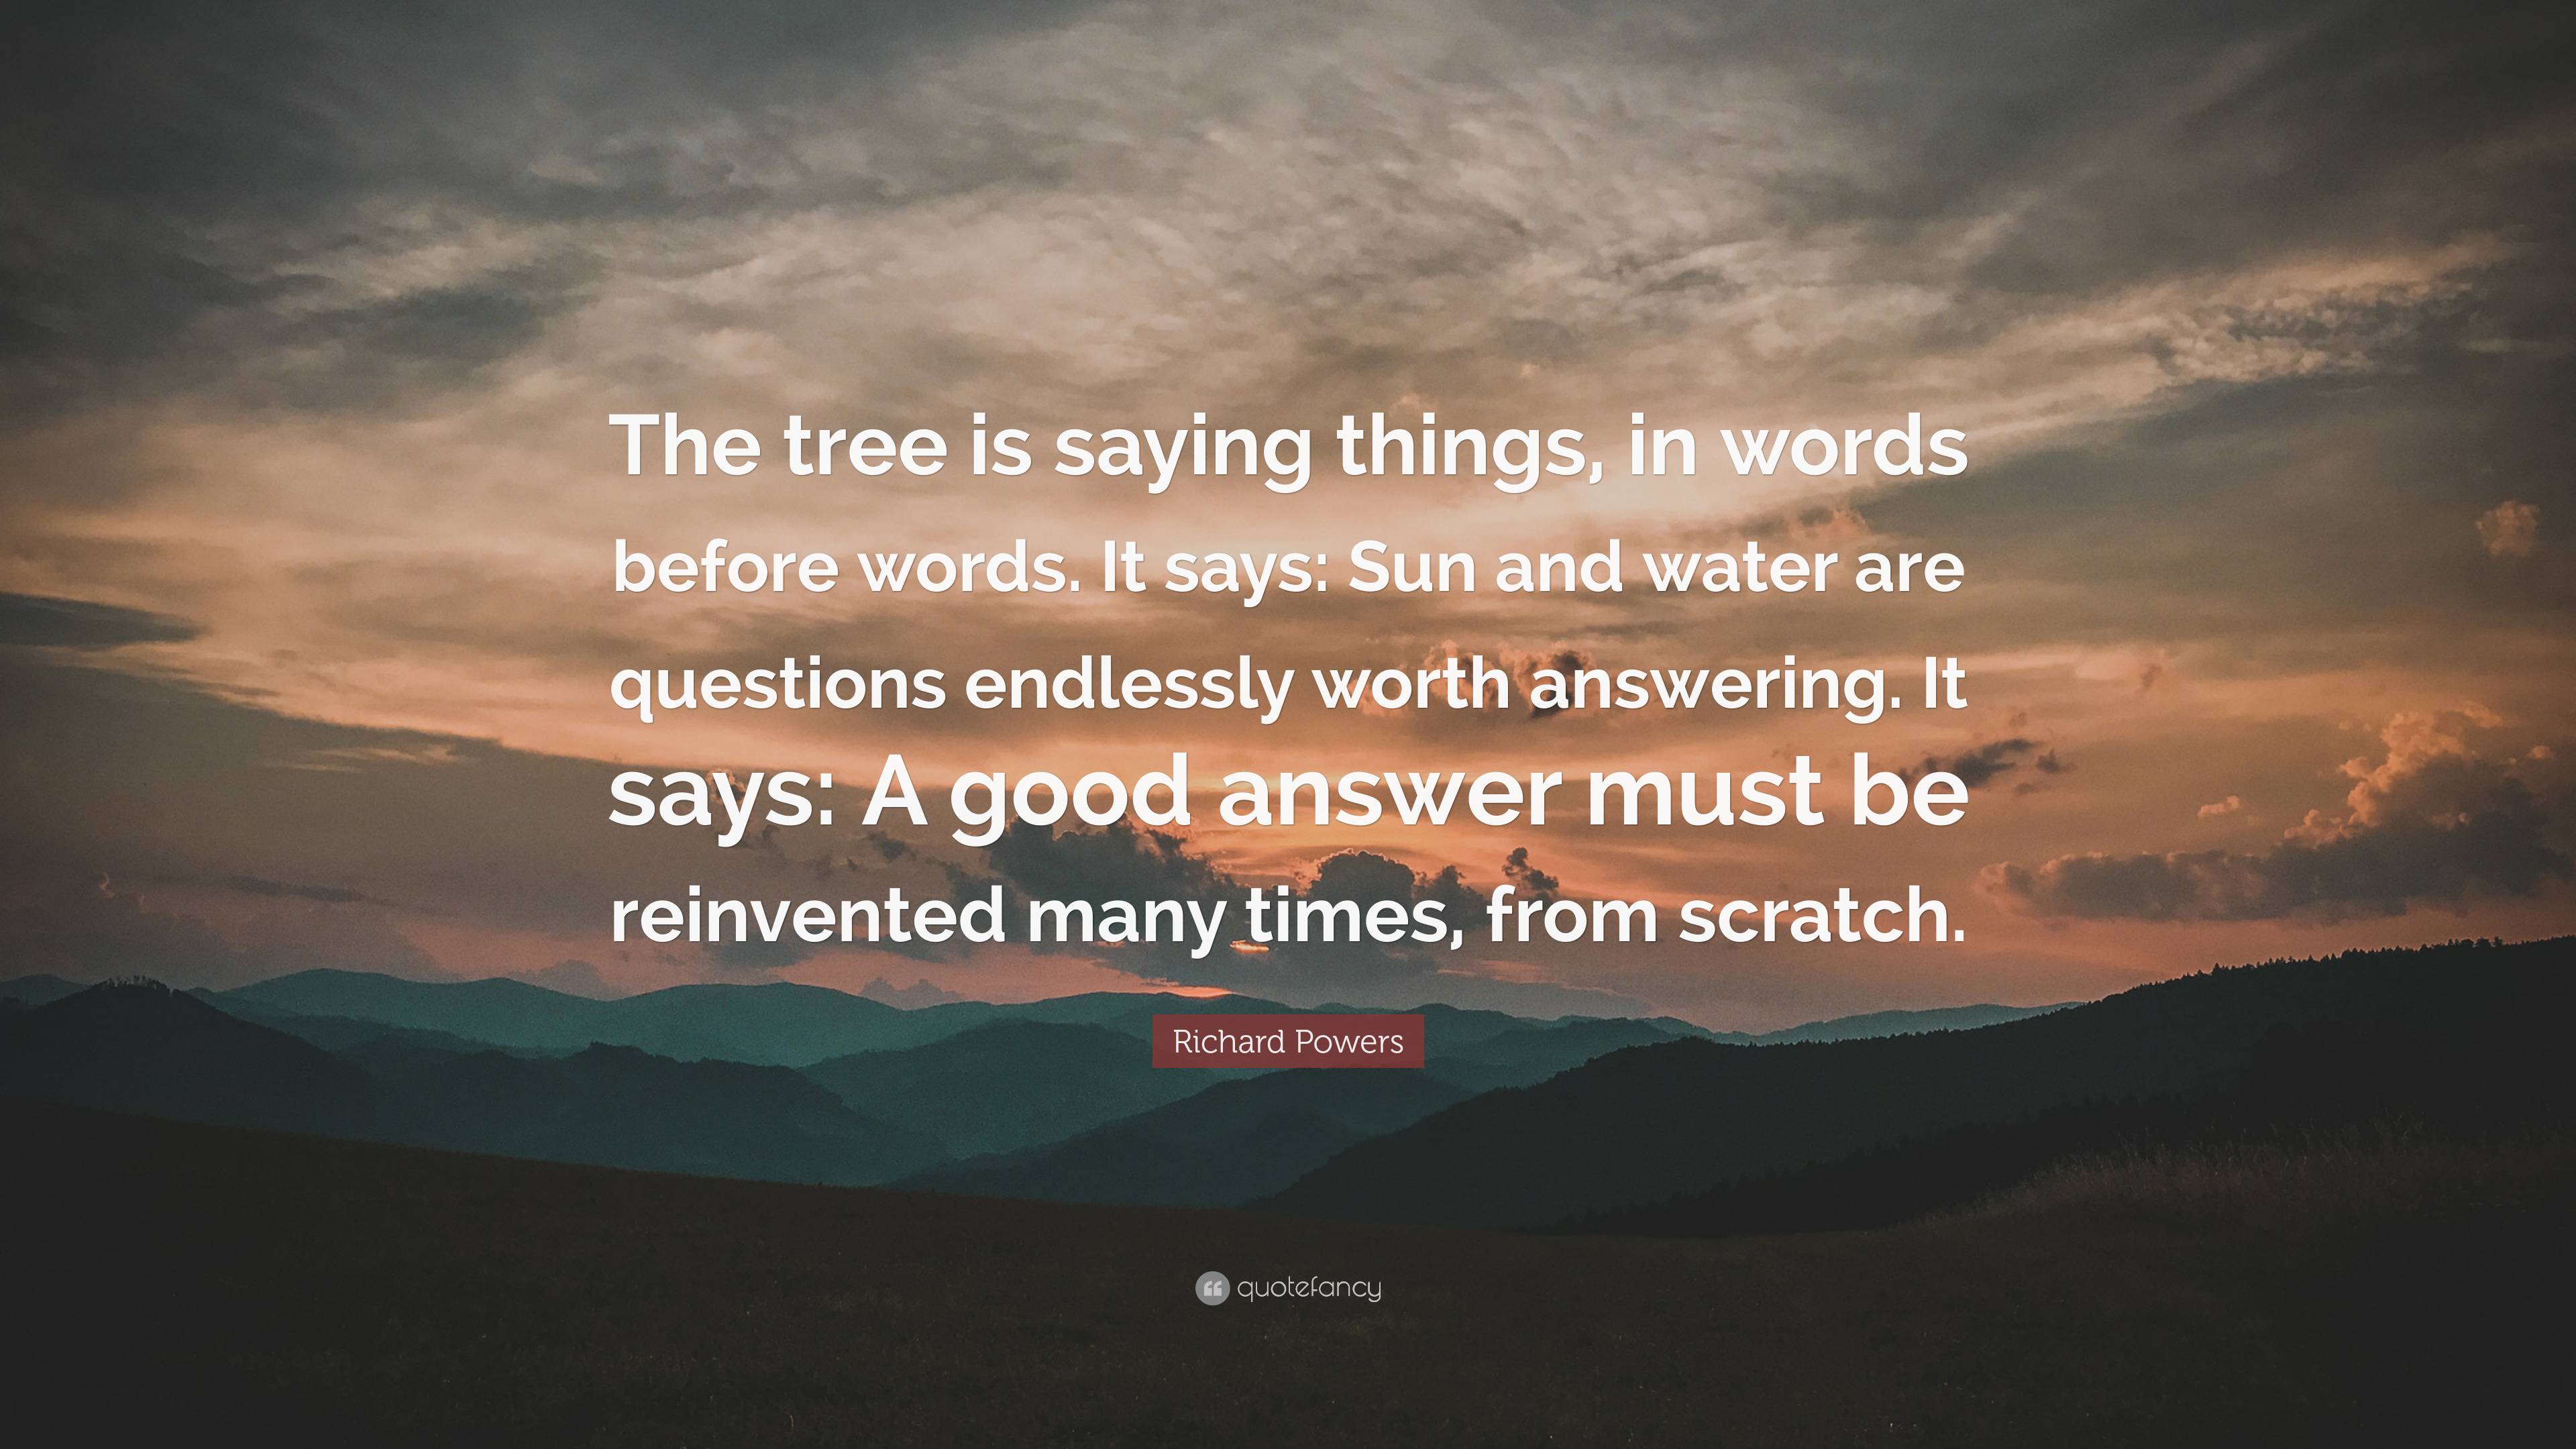 The Wisdom Tree has something interesting thing to say : r